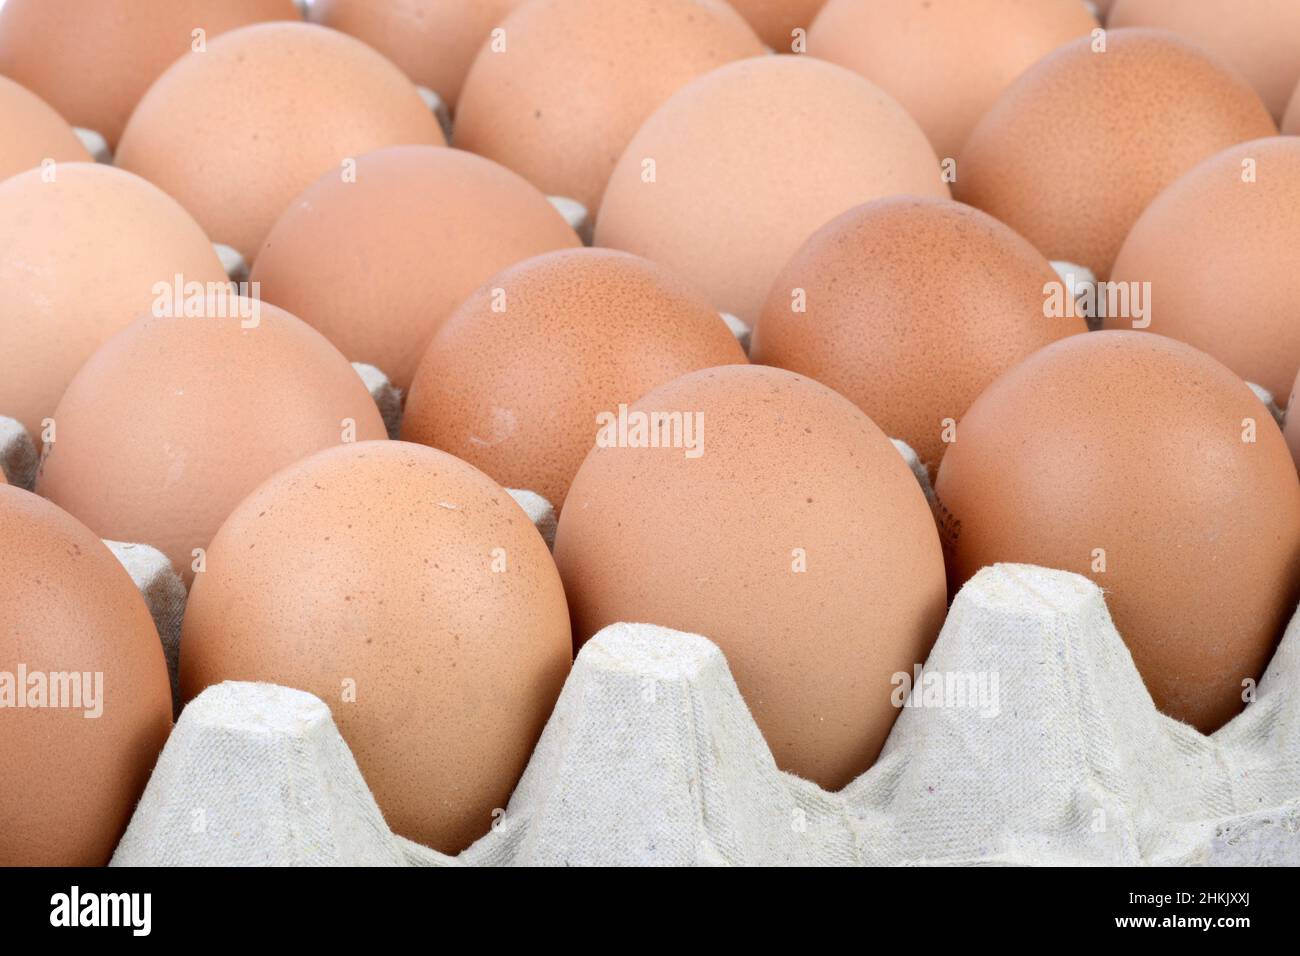 fresh brown eggs on an egg tray Stock Photo